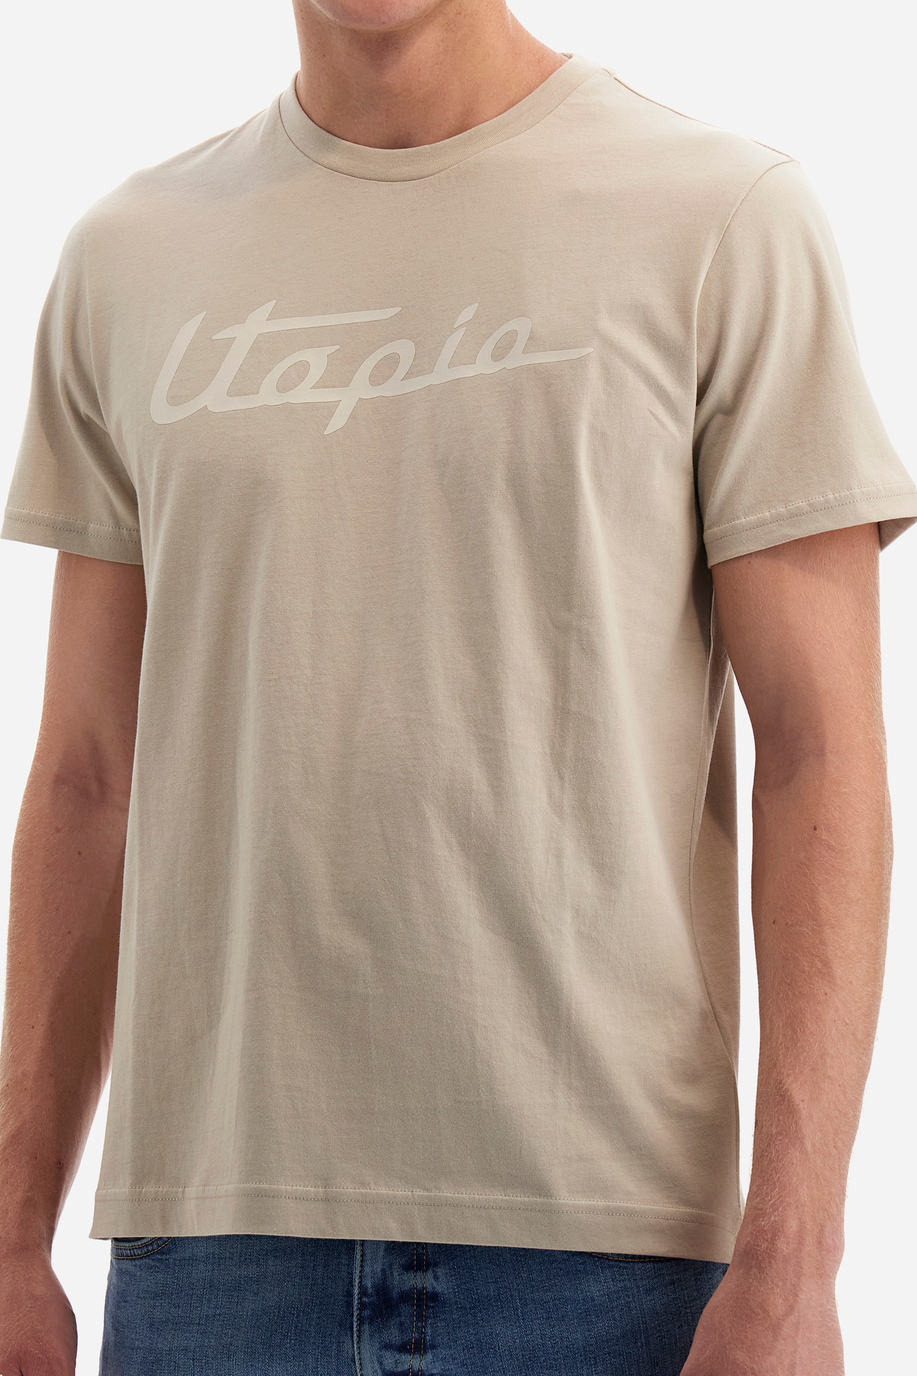 T-shirt regular fit in cotone - Yongsun - Pagani by La Martina | La Martina - Official Online Shop